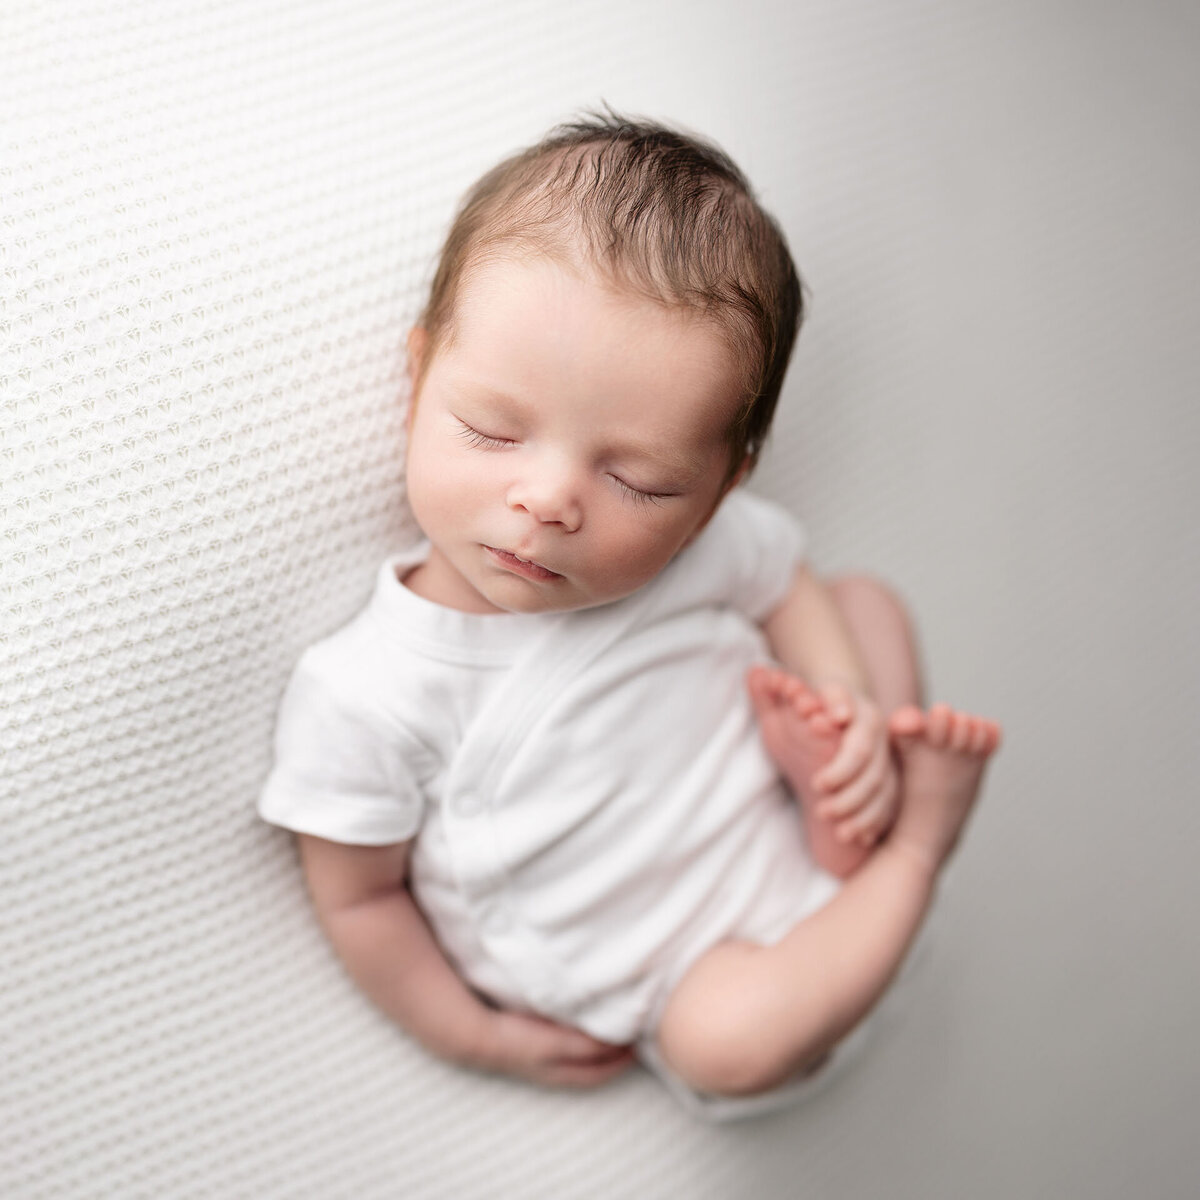 memphis newborn photography by jen howell